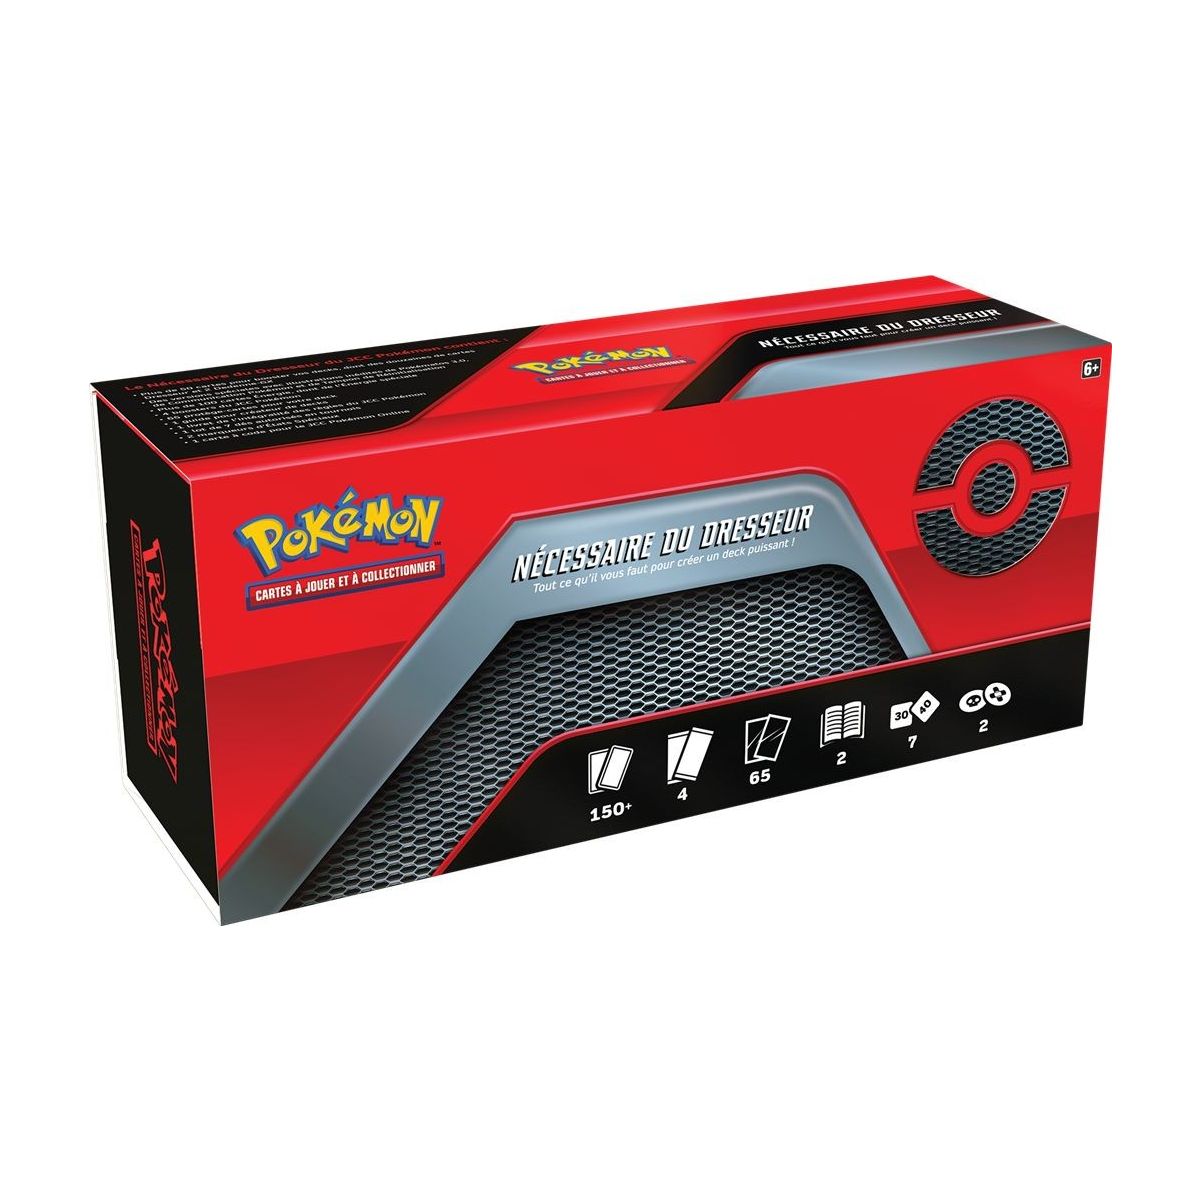 Pokémon - Trainer's Kit 2020 - FR